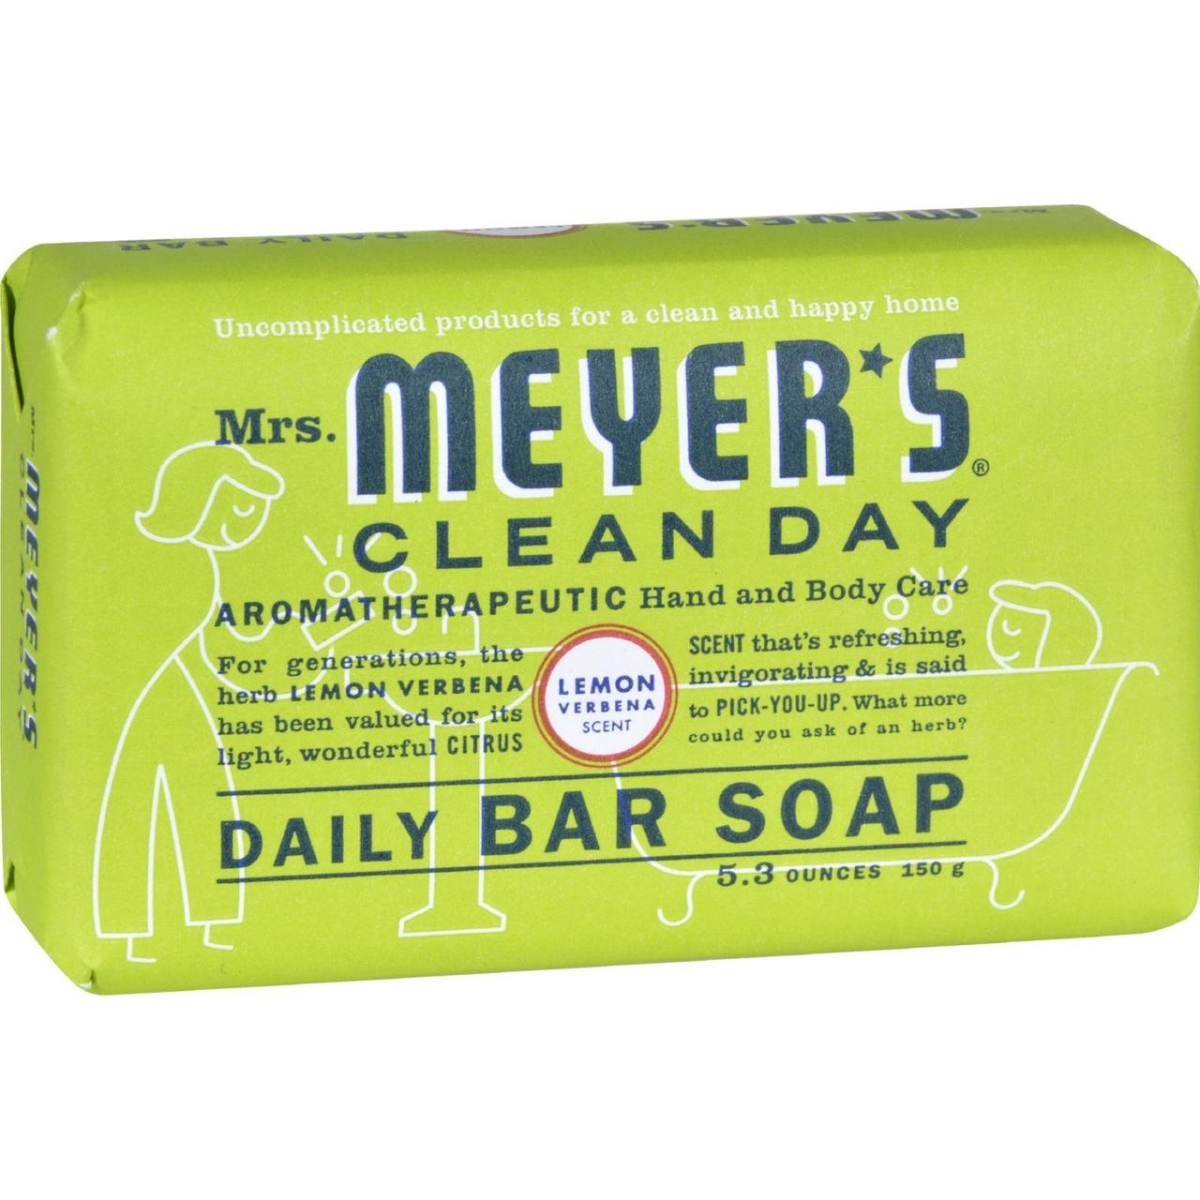 Hg1417815 5.3 Oz Bar Soap, Lemon Verbena - Case Of 12